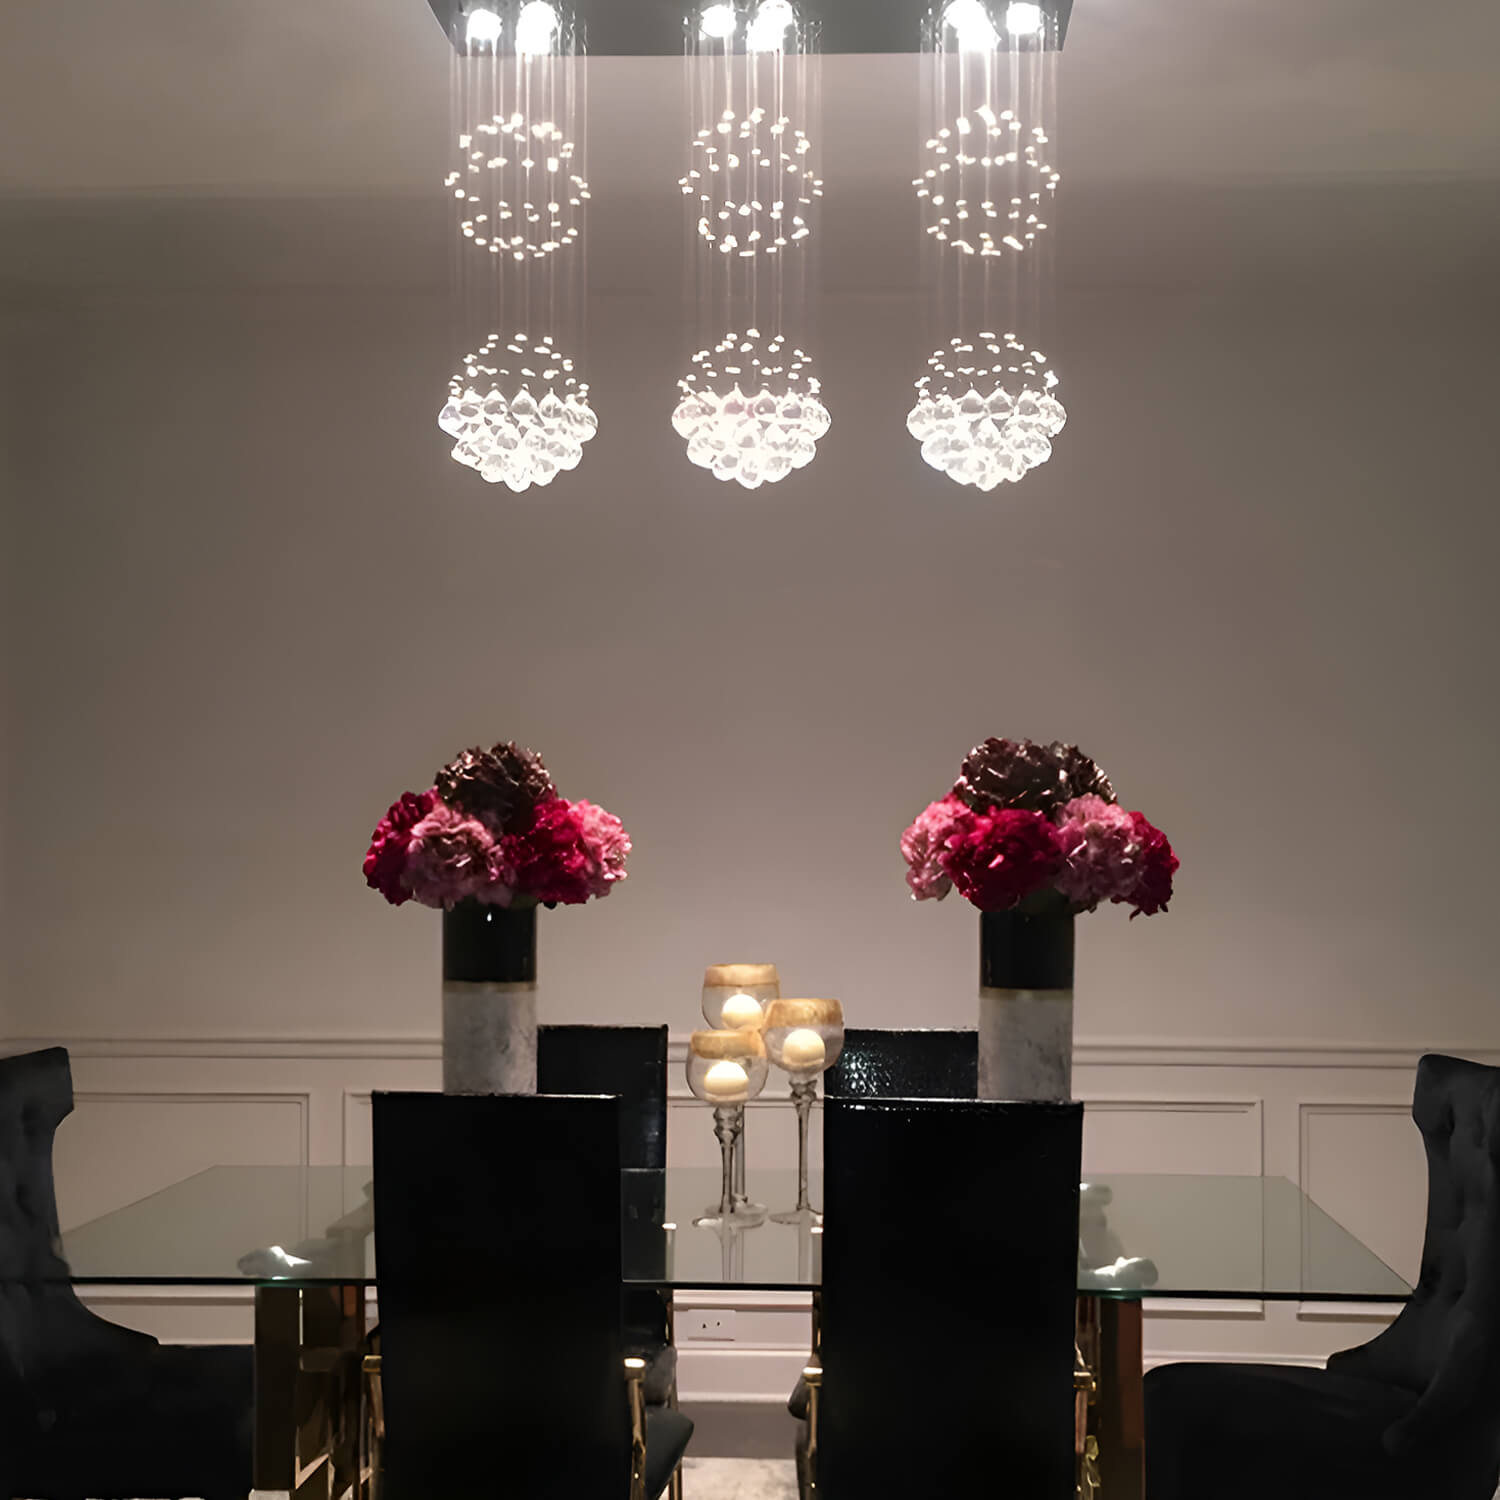  Contemporary Island Crystal Raindrop Chandelier - Dining Room Ceiling Light-light-on |Sofary